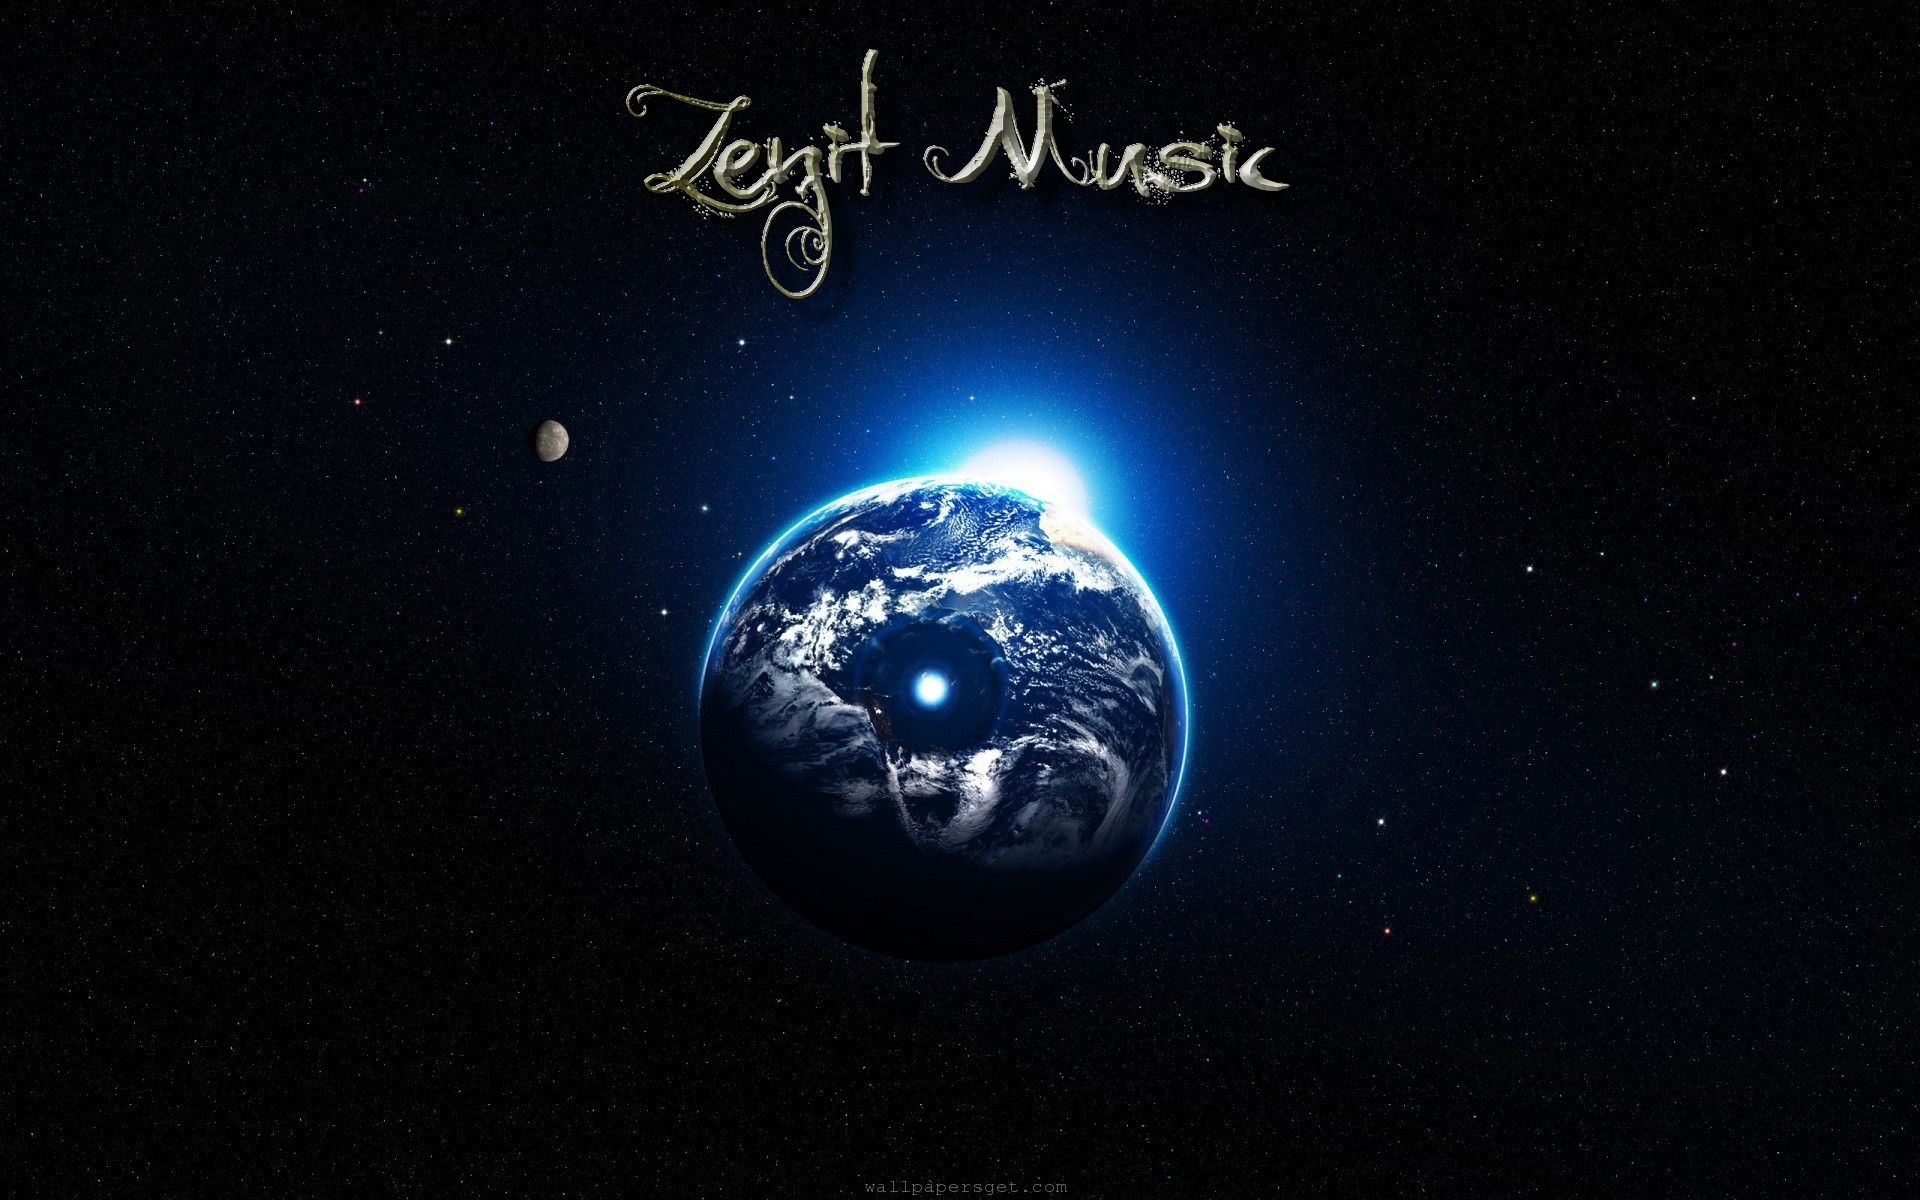 Zenit Music by aenszguhelem